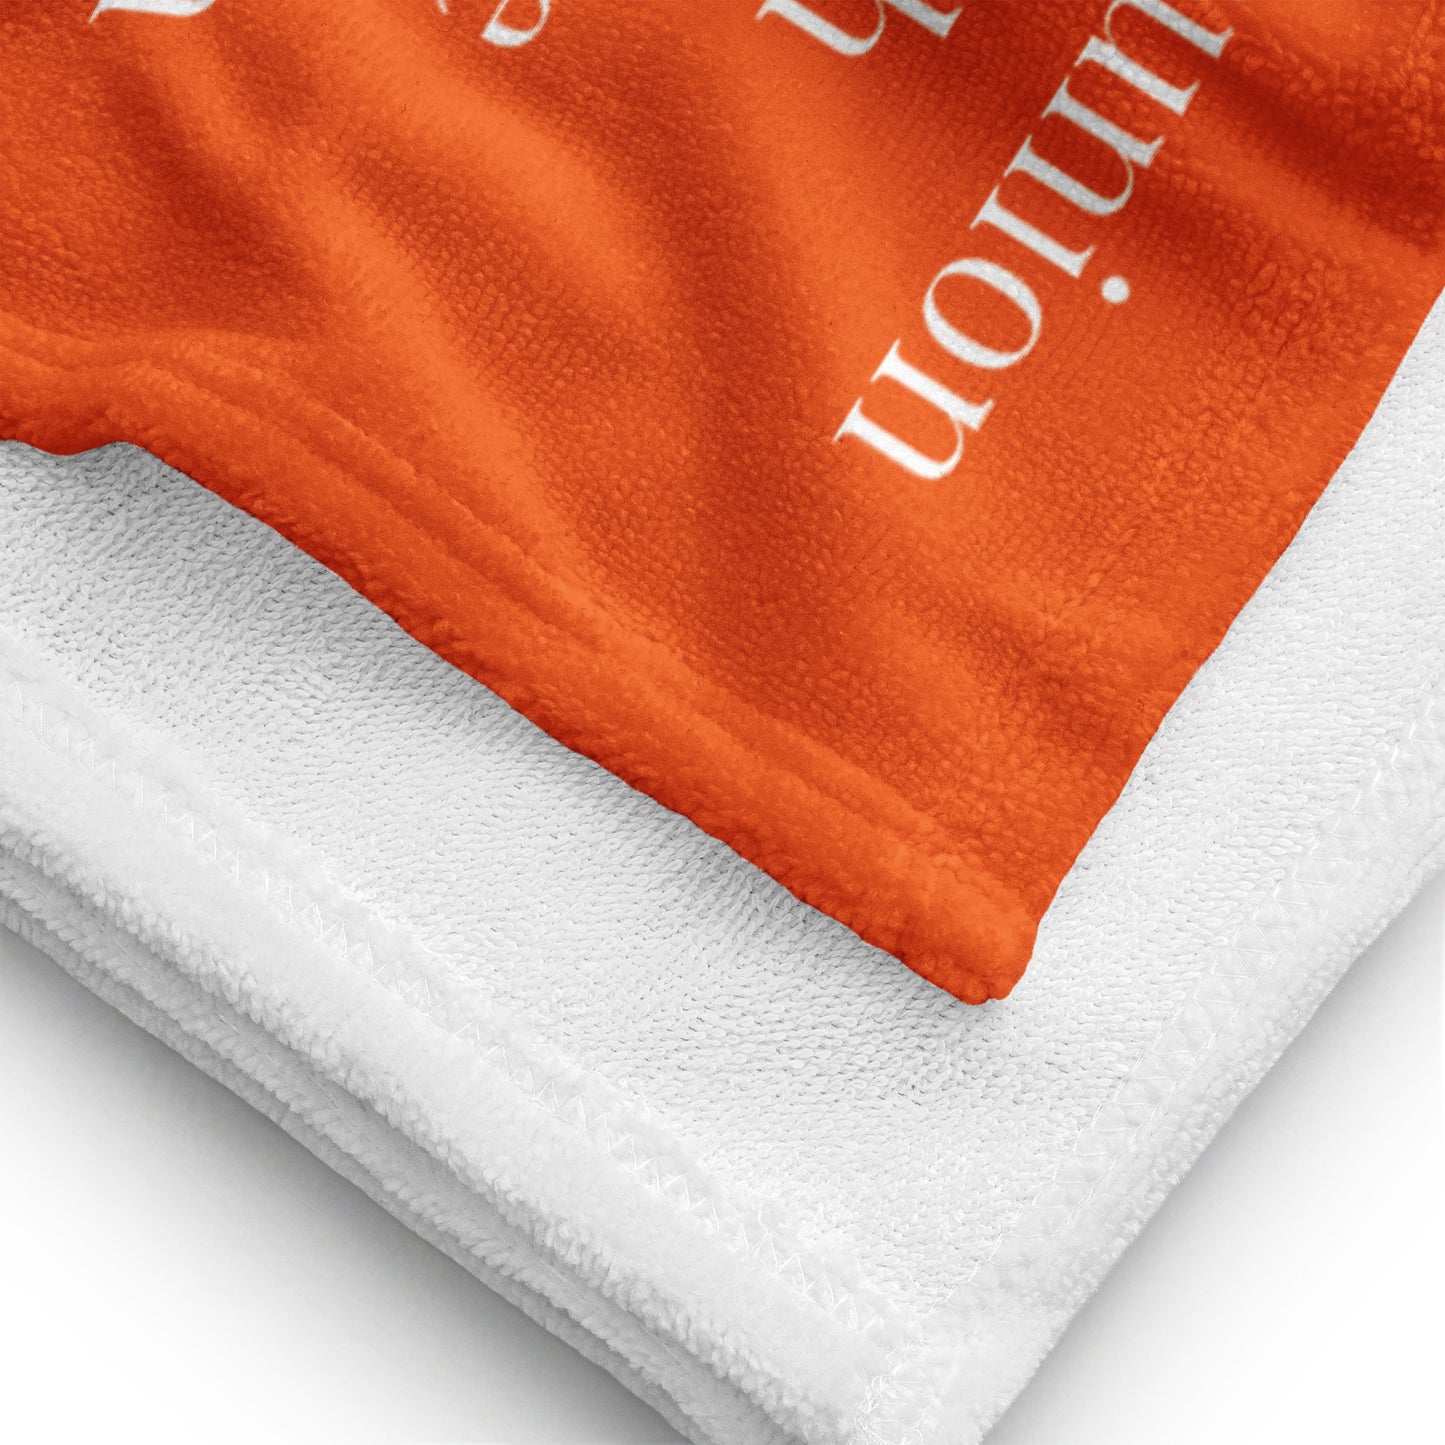 Worship collection inspirational towel - Orange/White